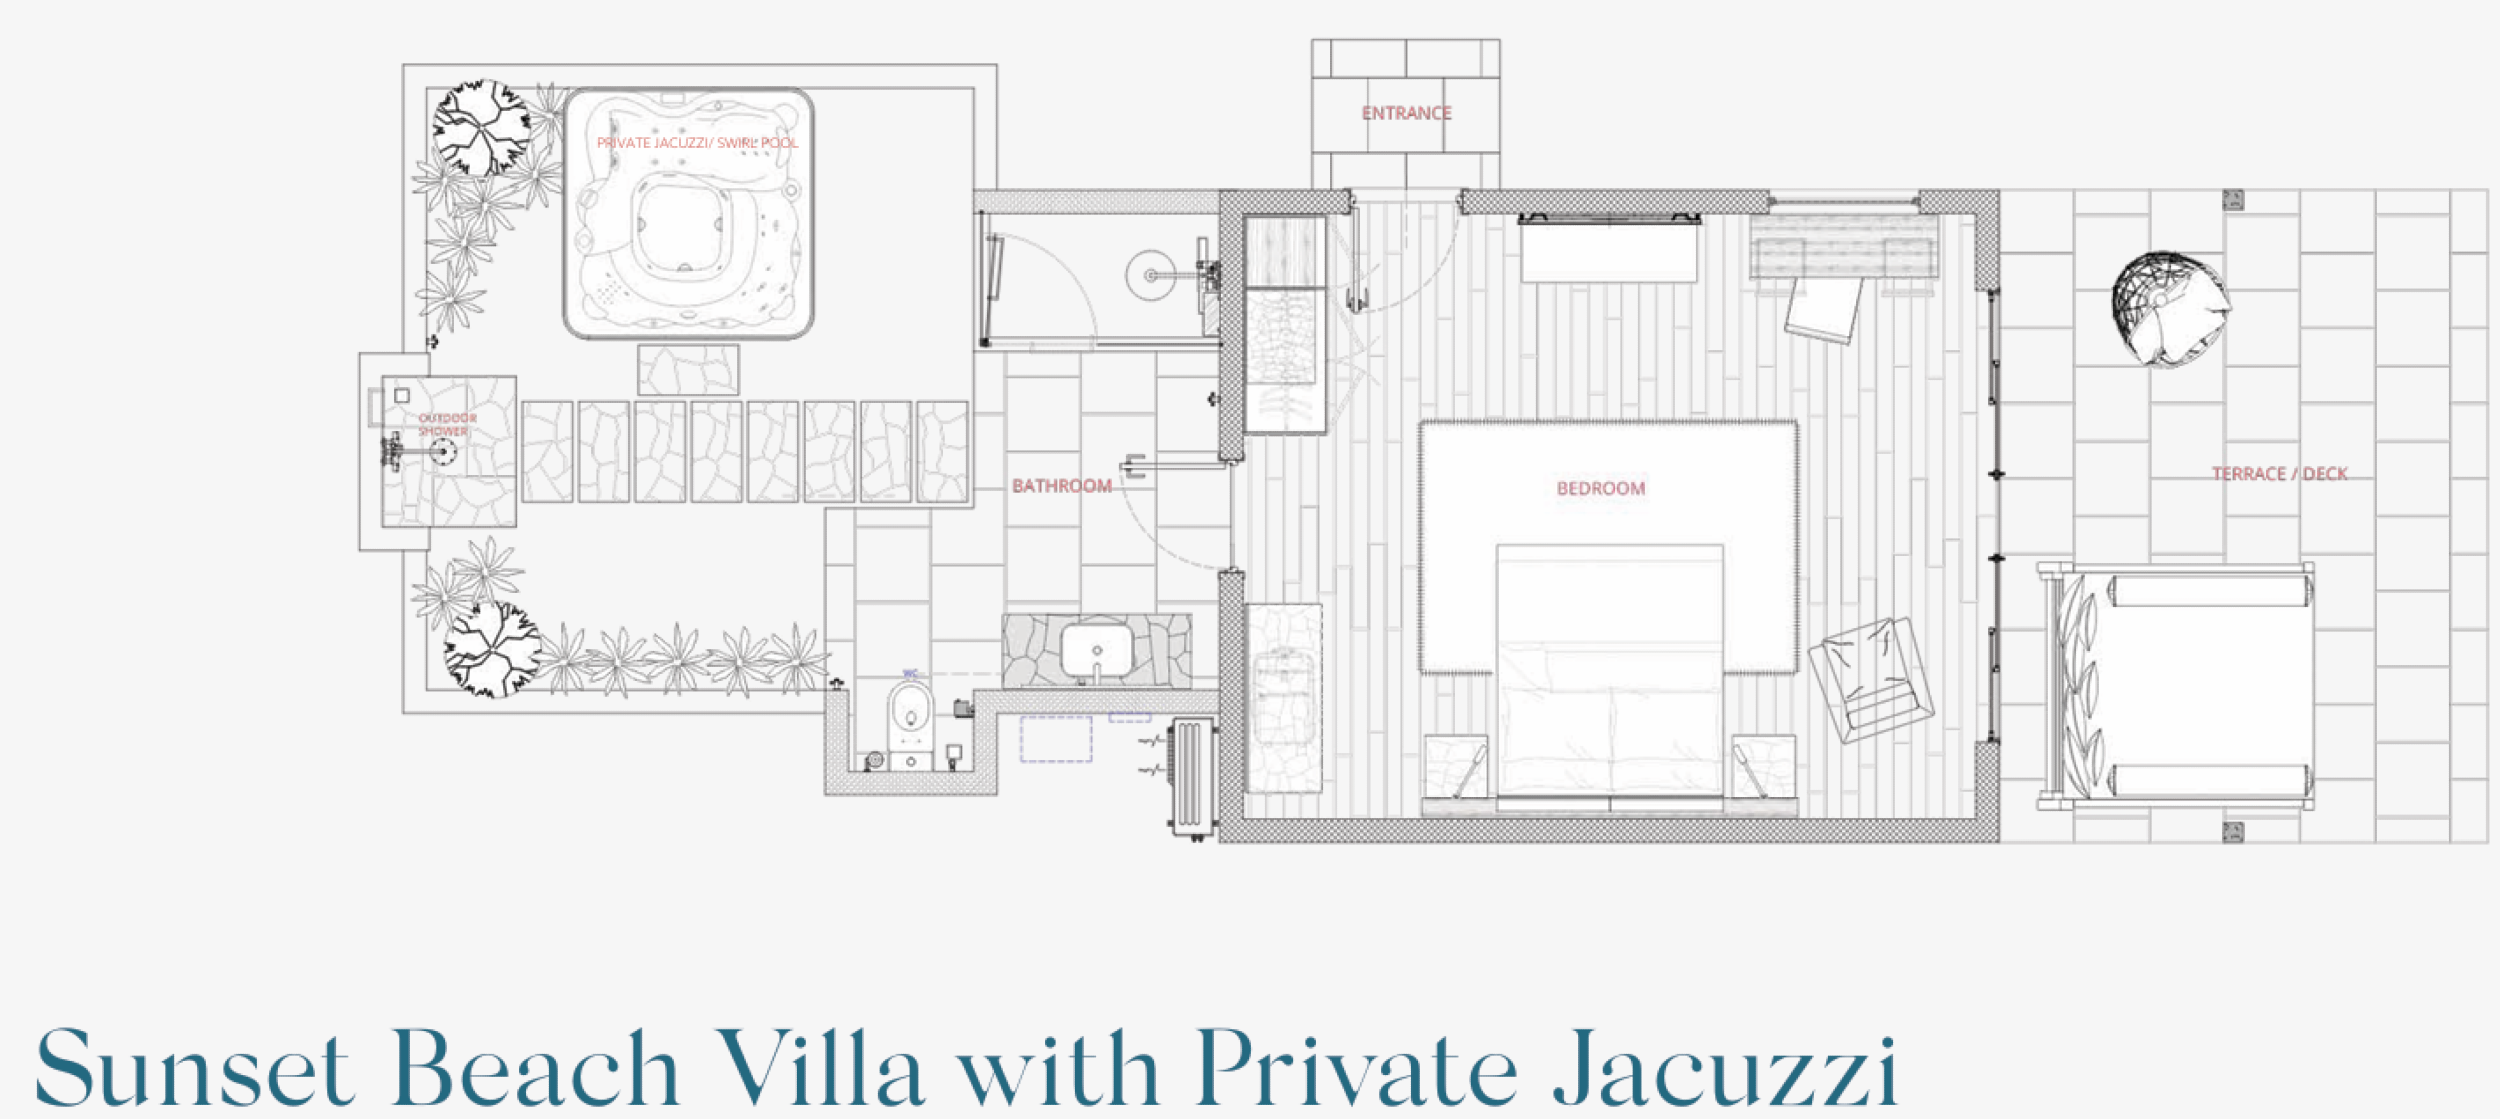 Sunset Beach Villa with Jacuzzi - Floor Plan - Nova Maldives